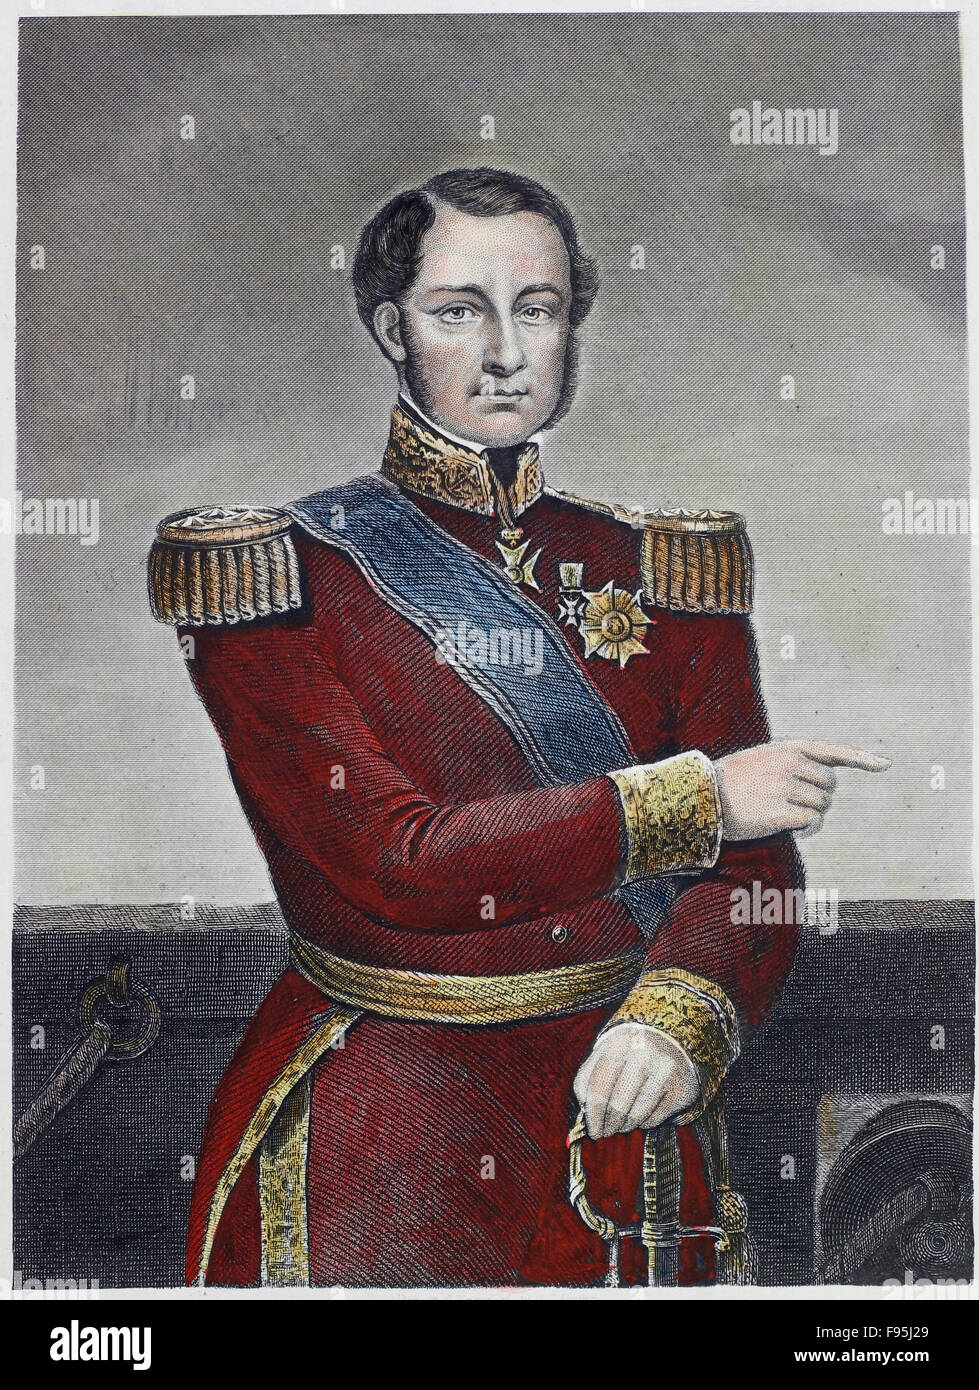 Admiral Hamelin. Stock Photo